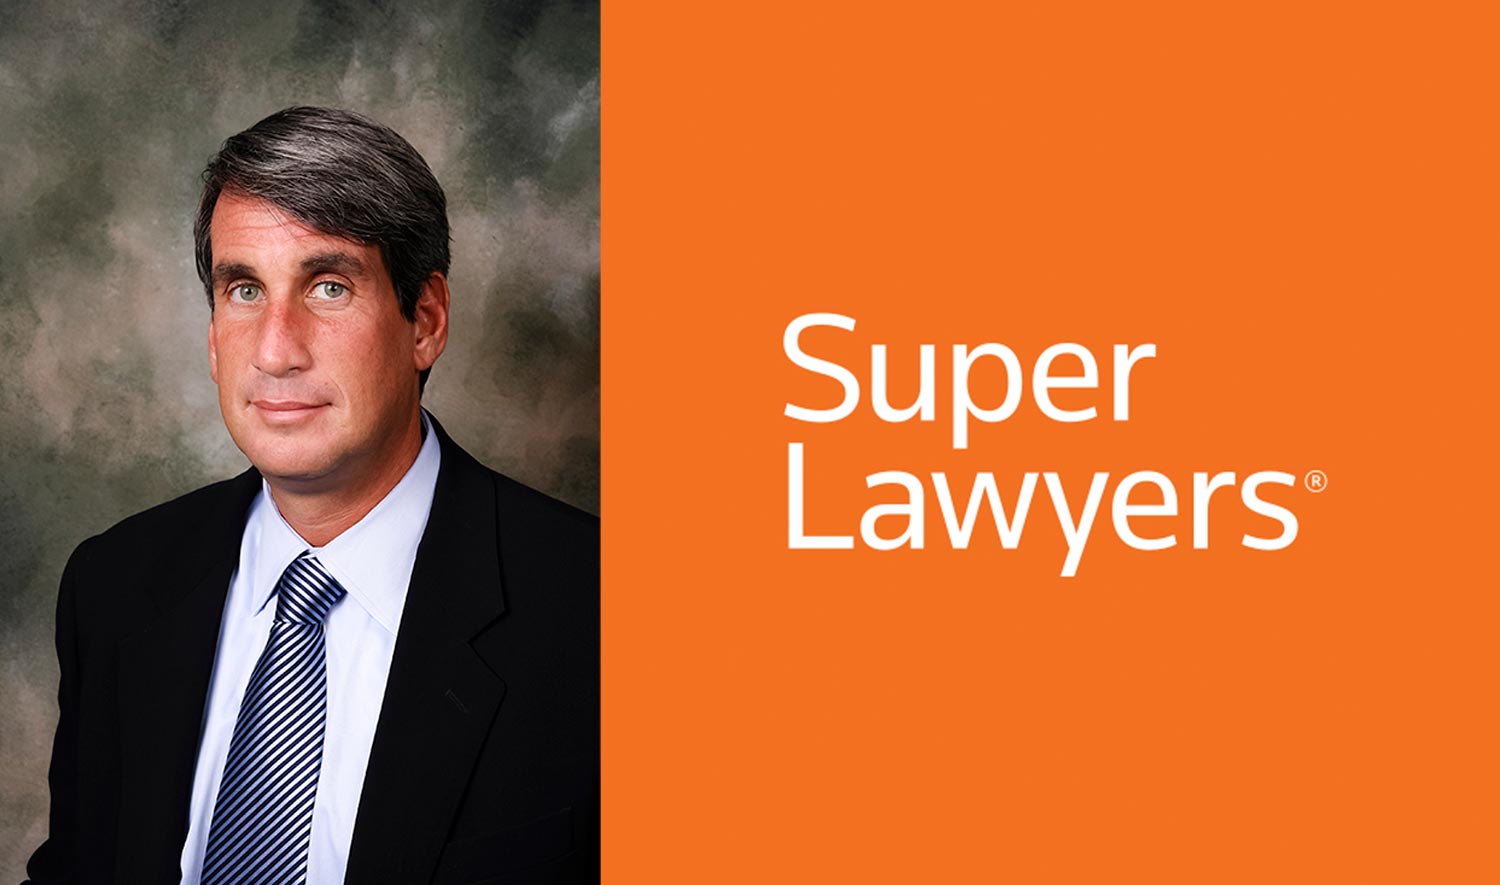 Bryan_Freedman-Super_Lawyers-Feature_Image-Rodezno_Studios-1